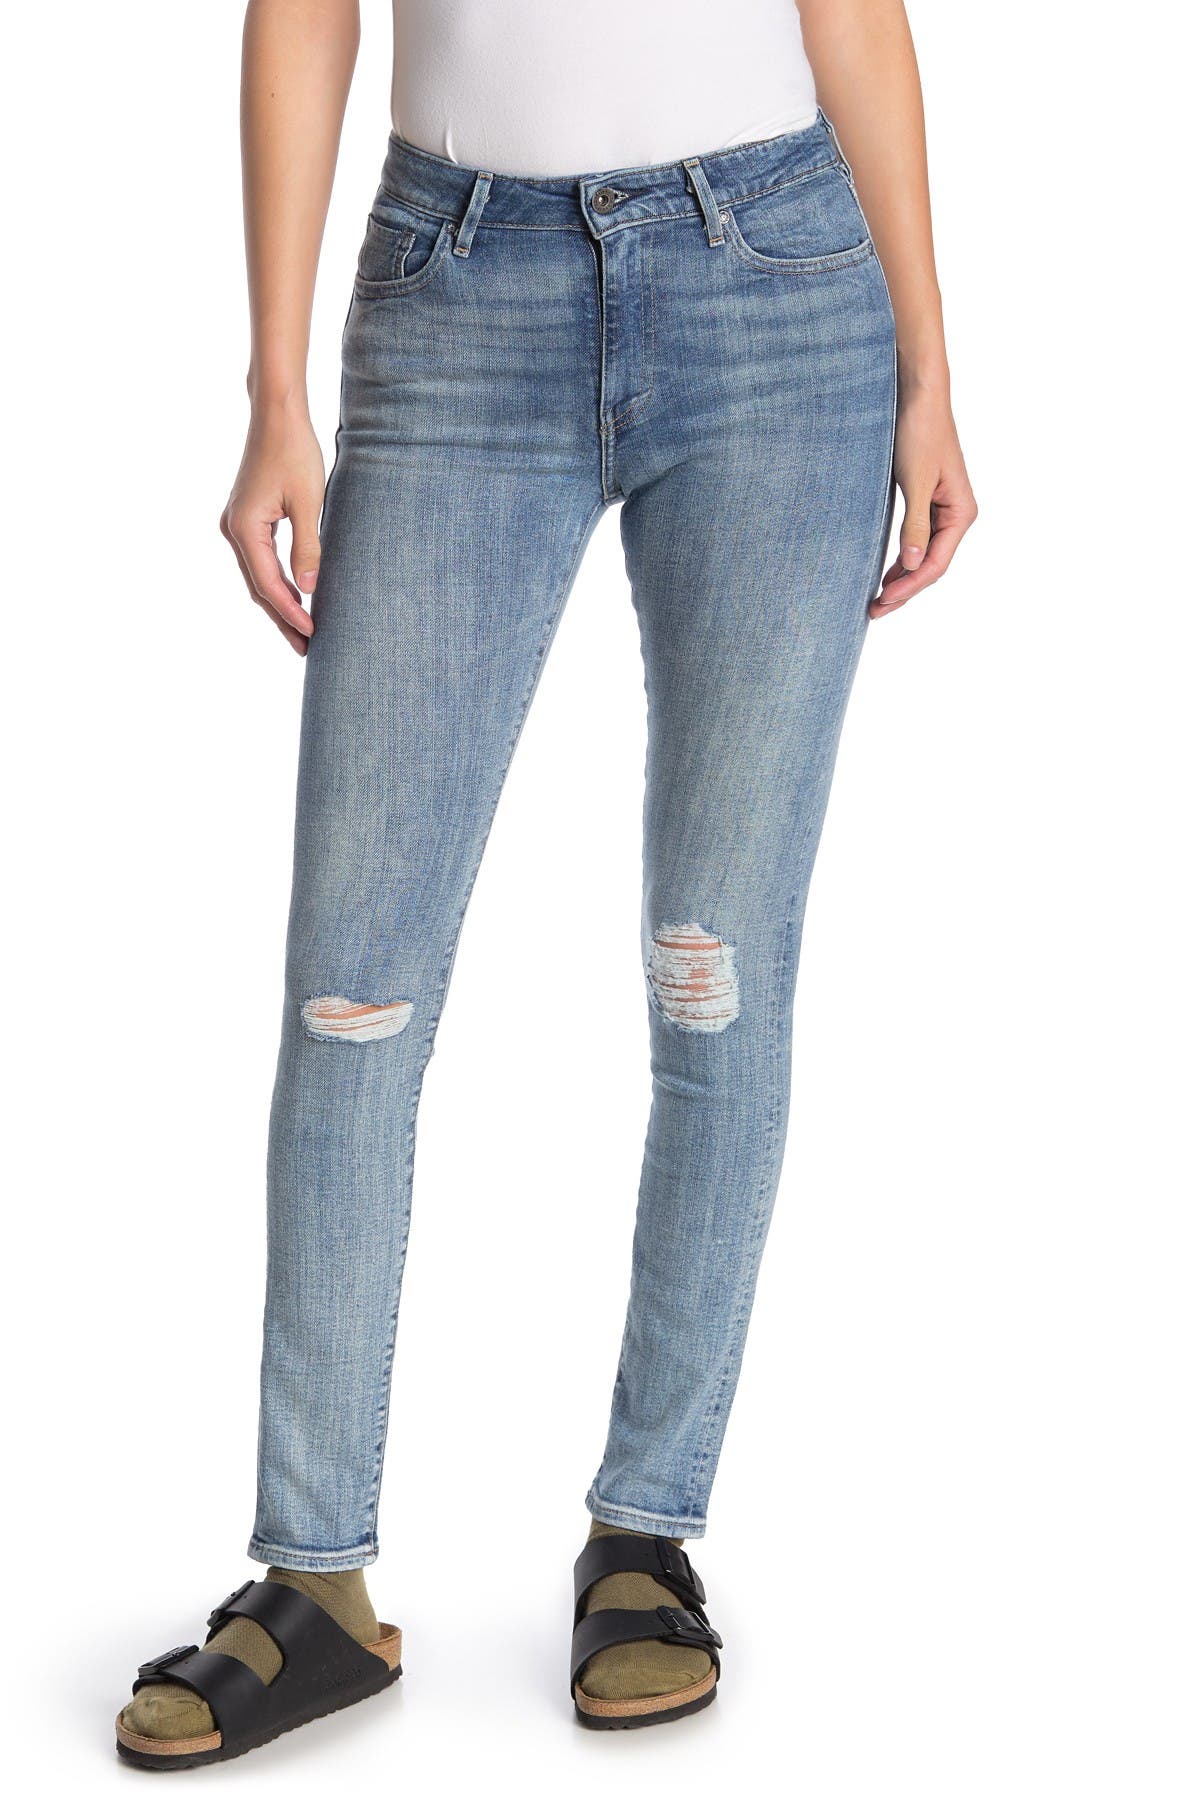 levi's 721 distressed skinny jeans